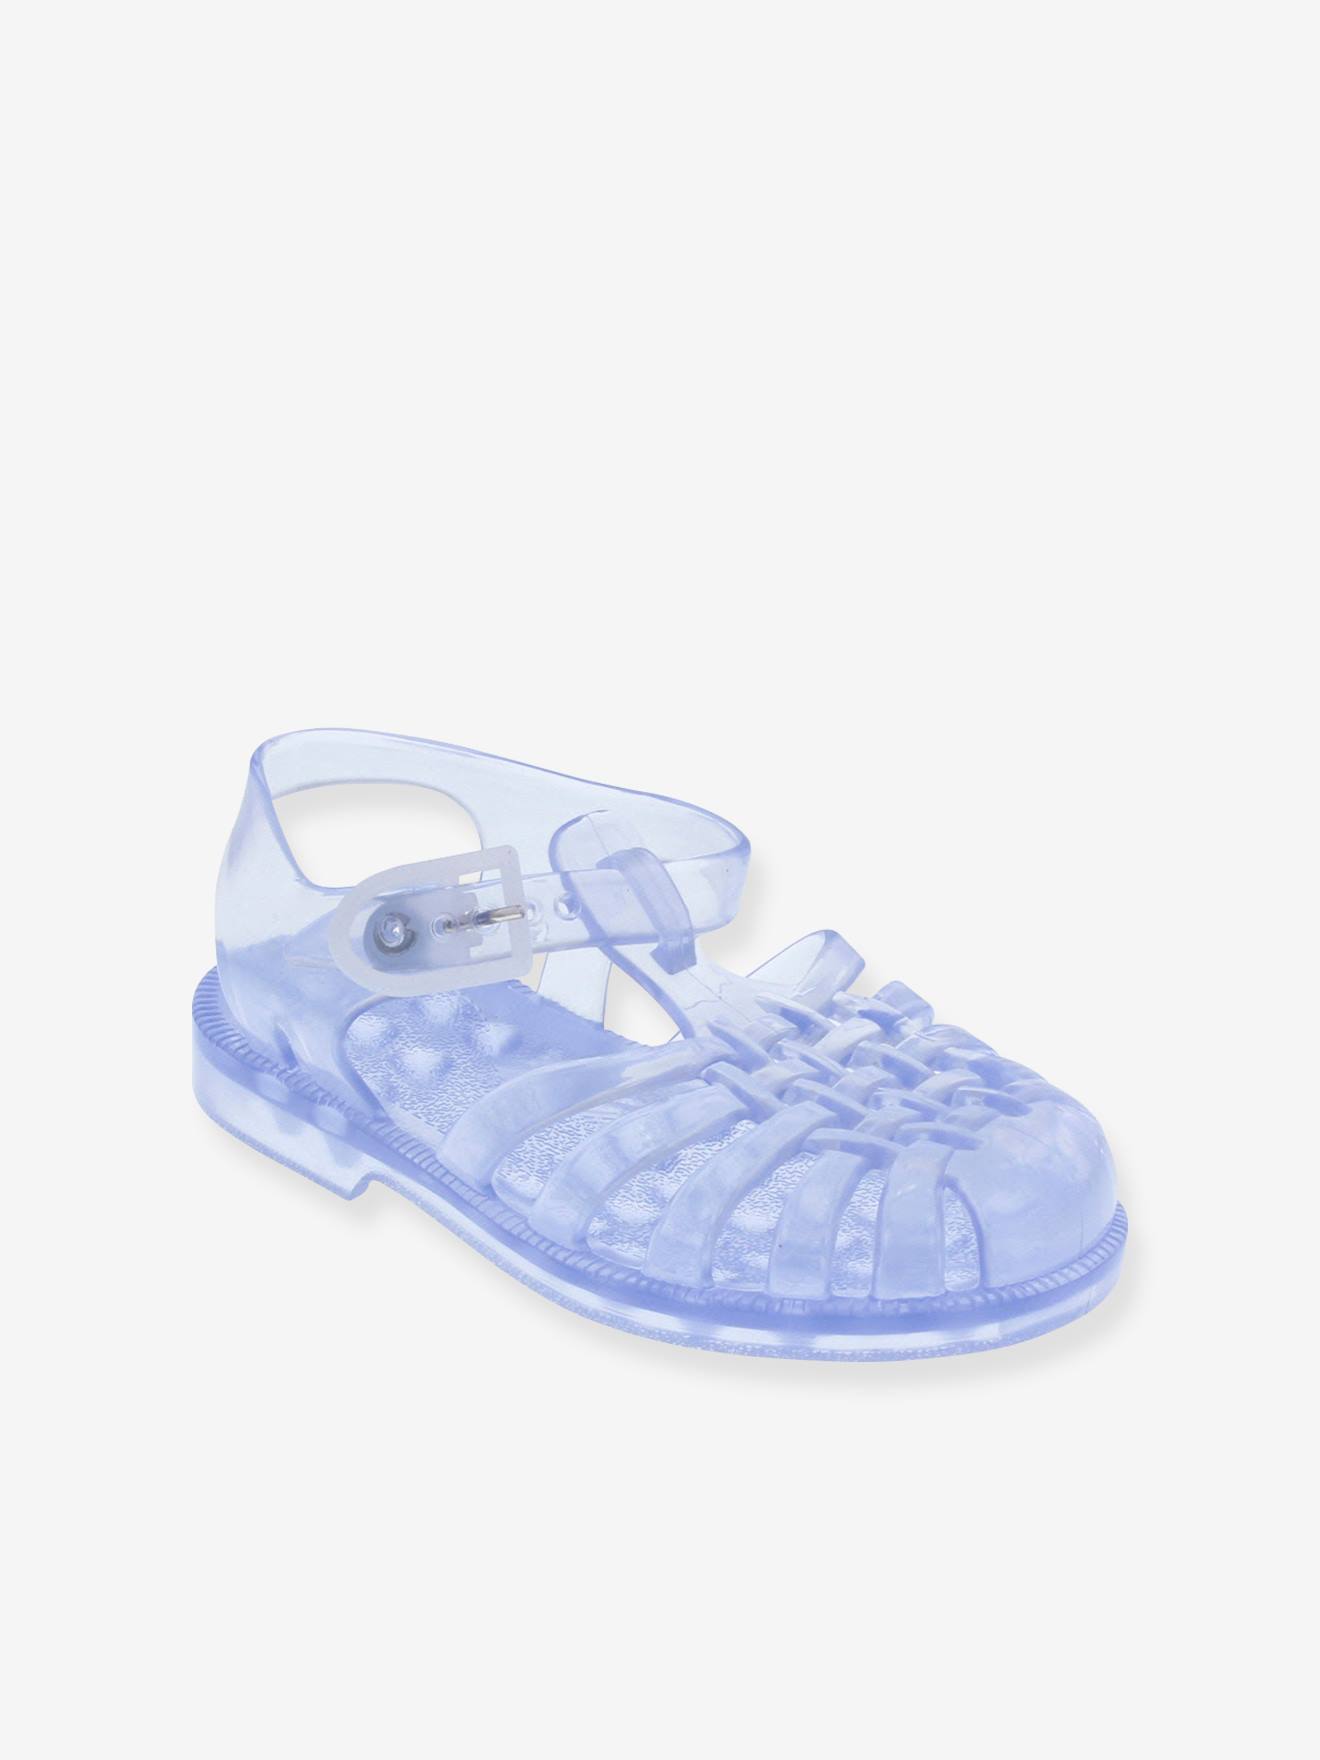 Sun Meduse(r) Sandals for Boys transparent